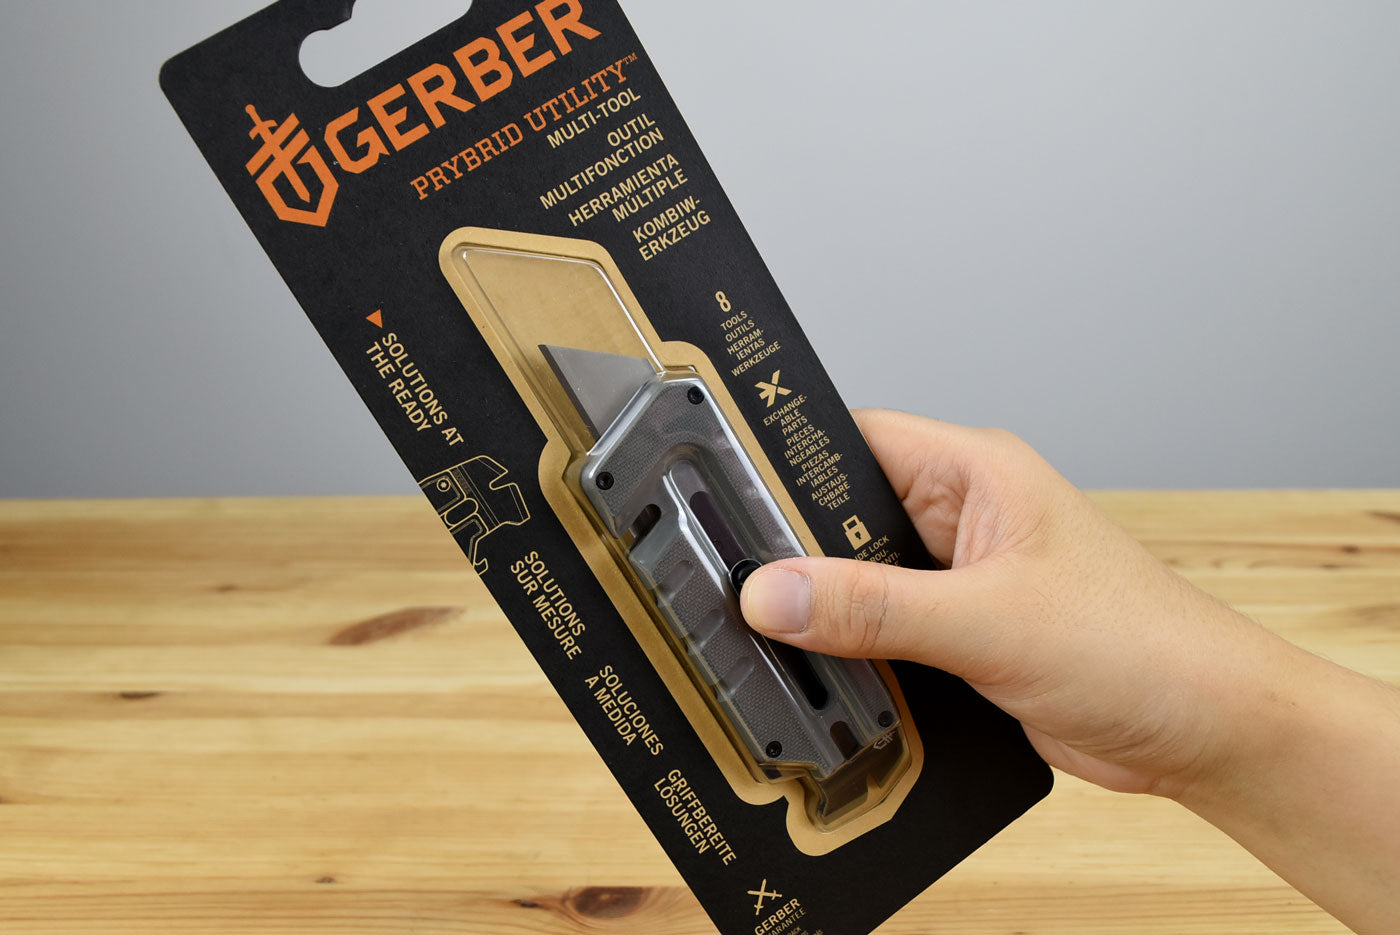 Gerber Prybrid X Multi-Tool Cutter